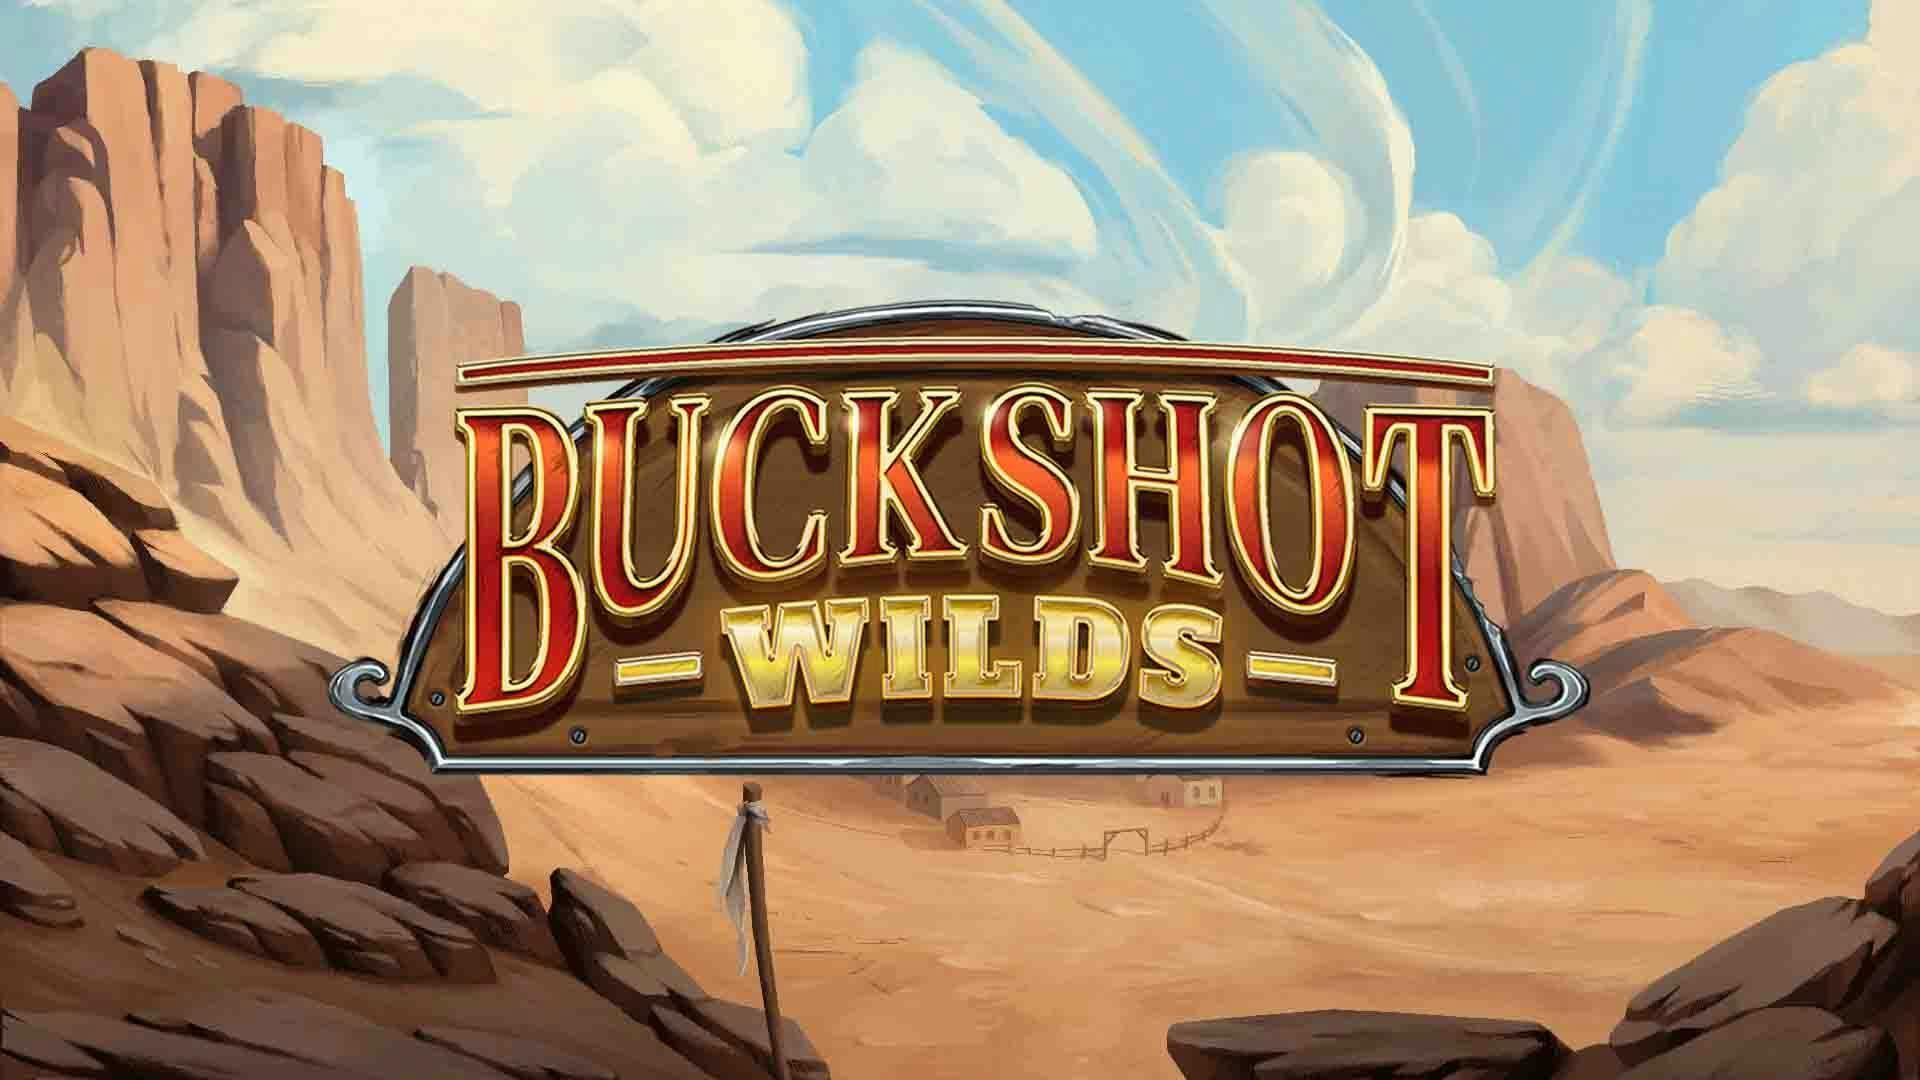 Buckshot Wilds Slot Machine Online Free Game Play